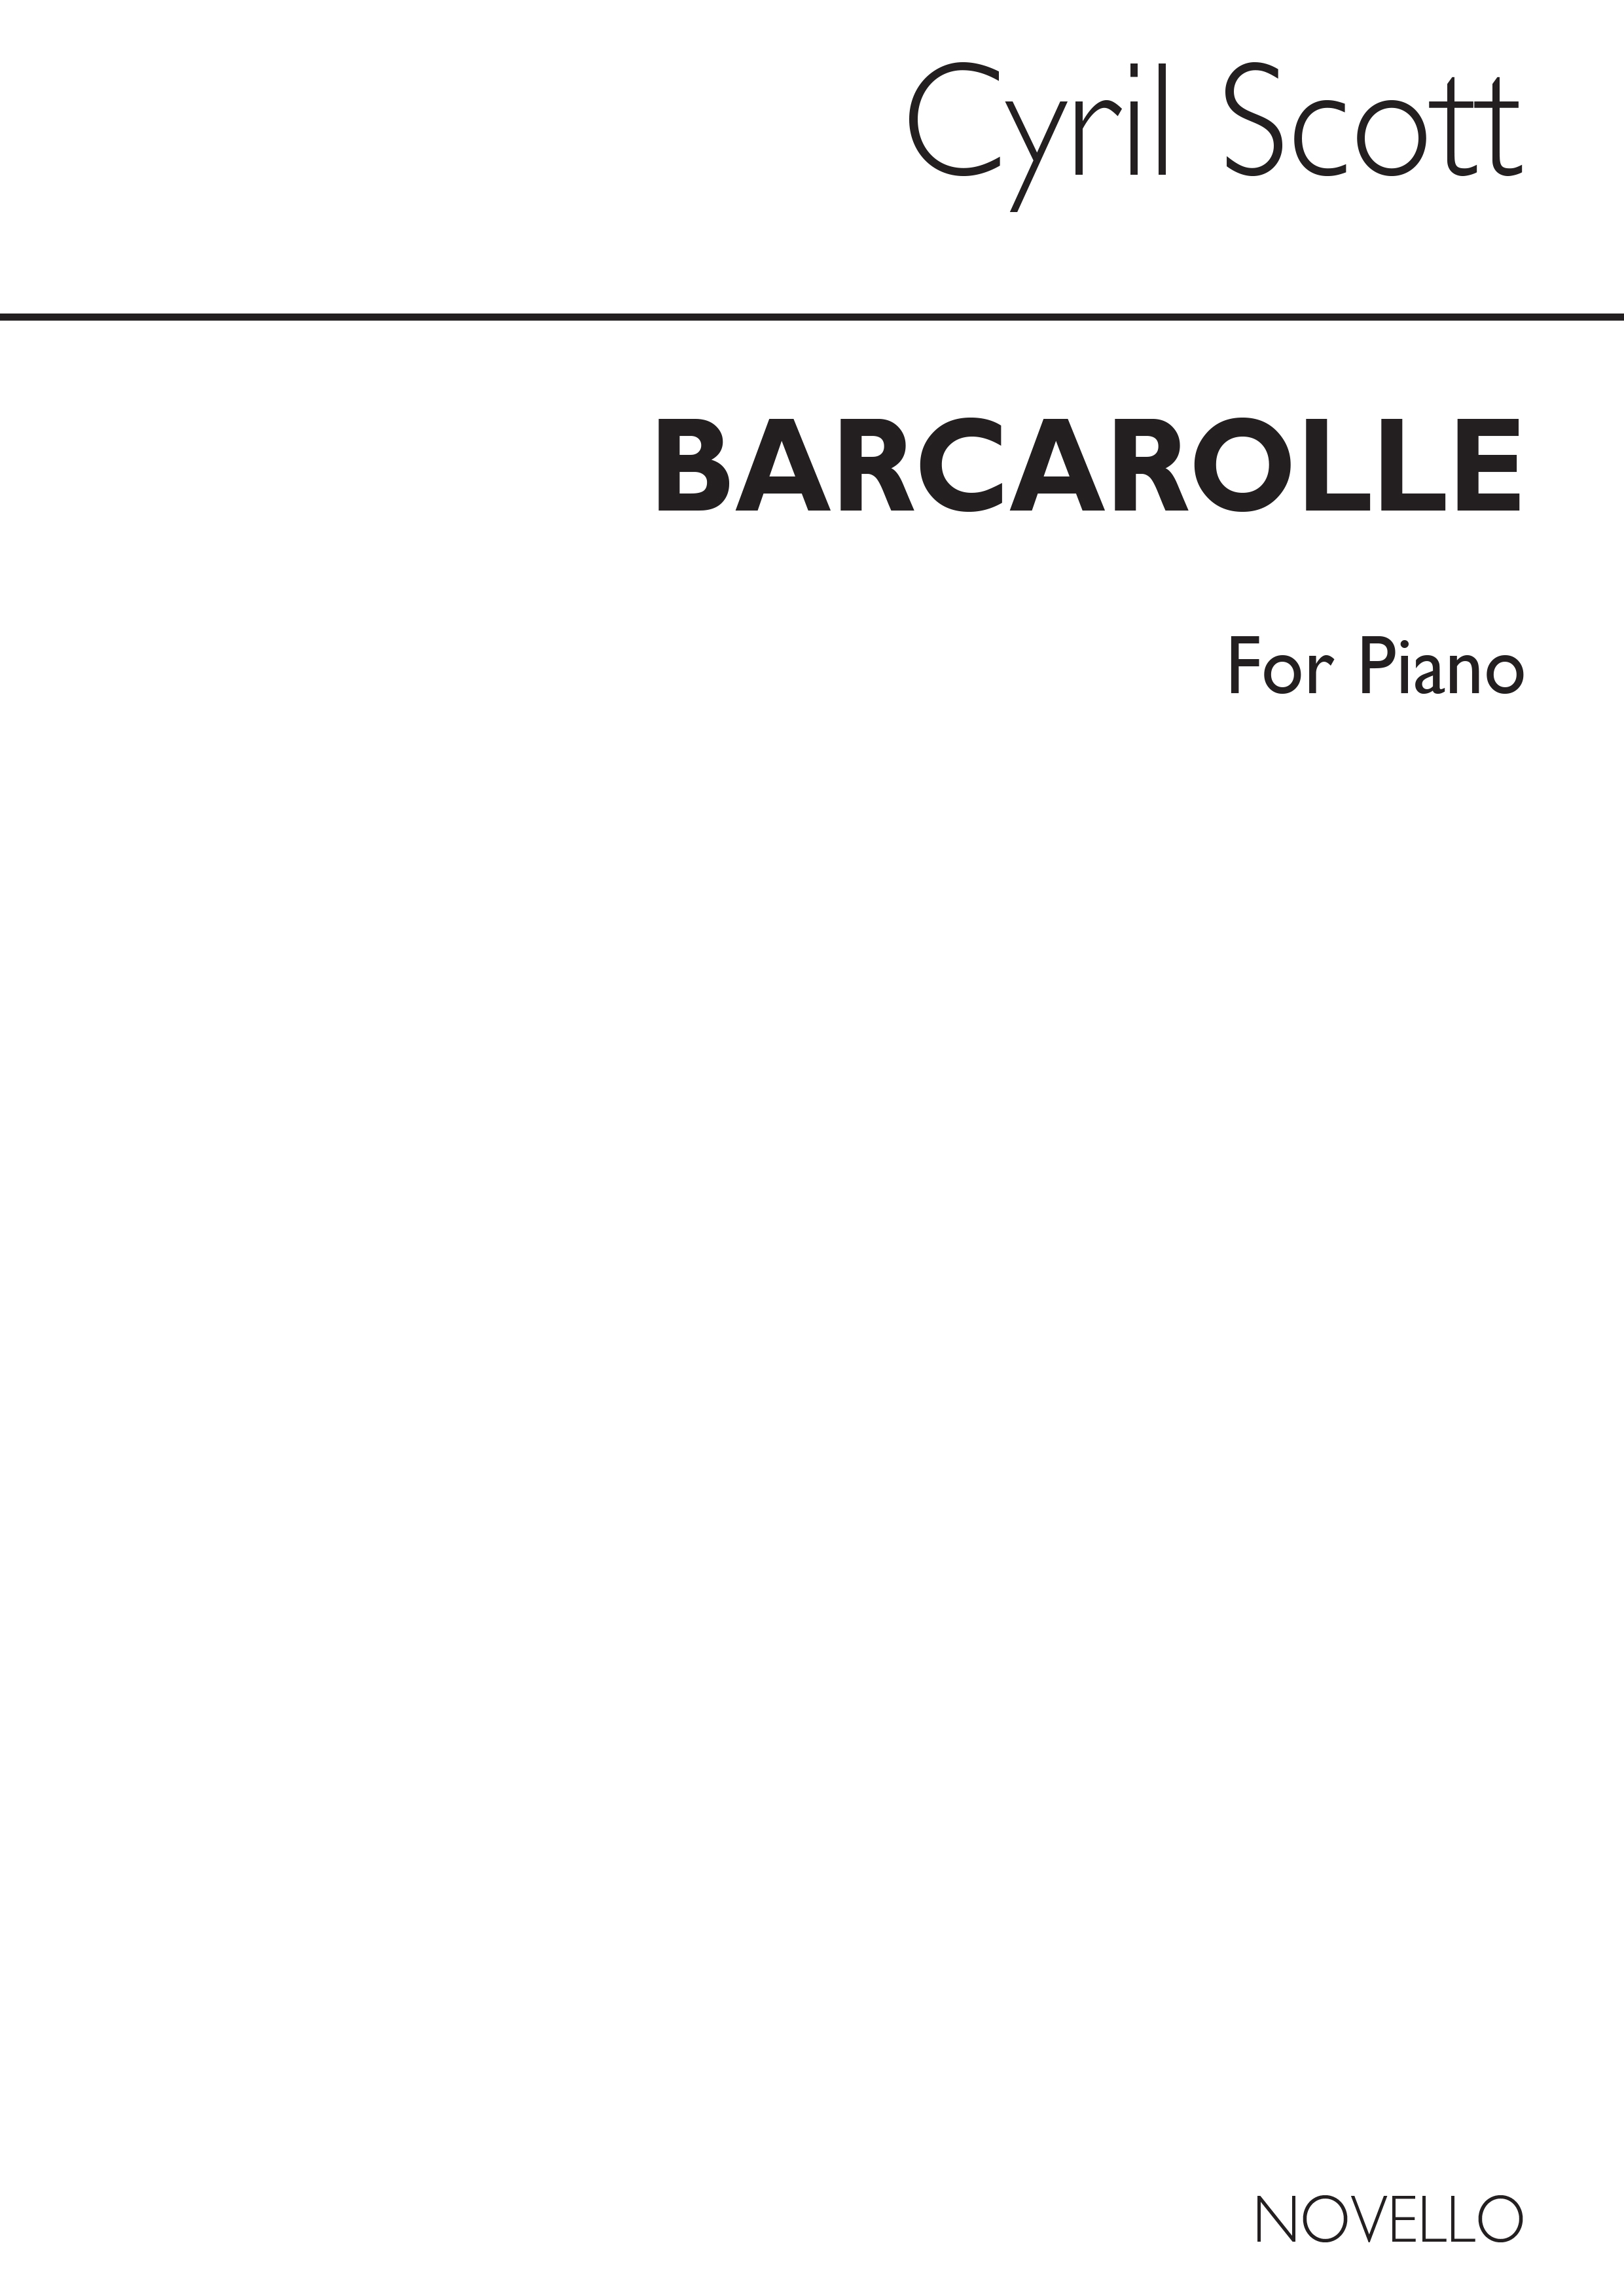 Scott: Barcarolle for Piano